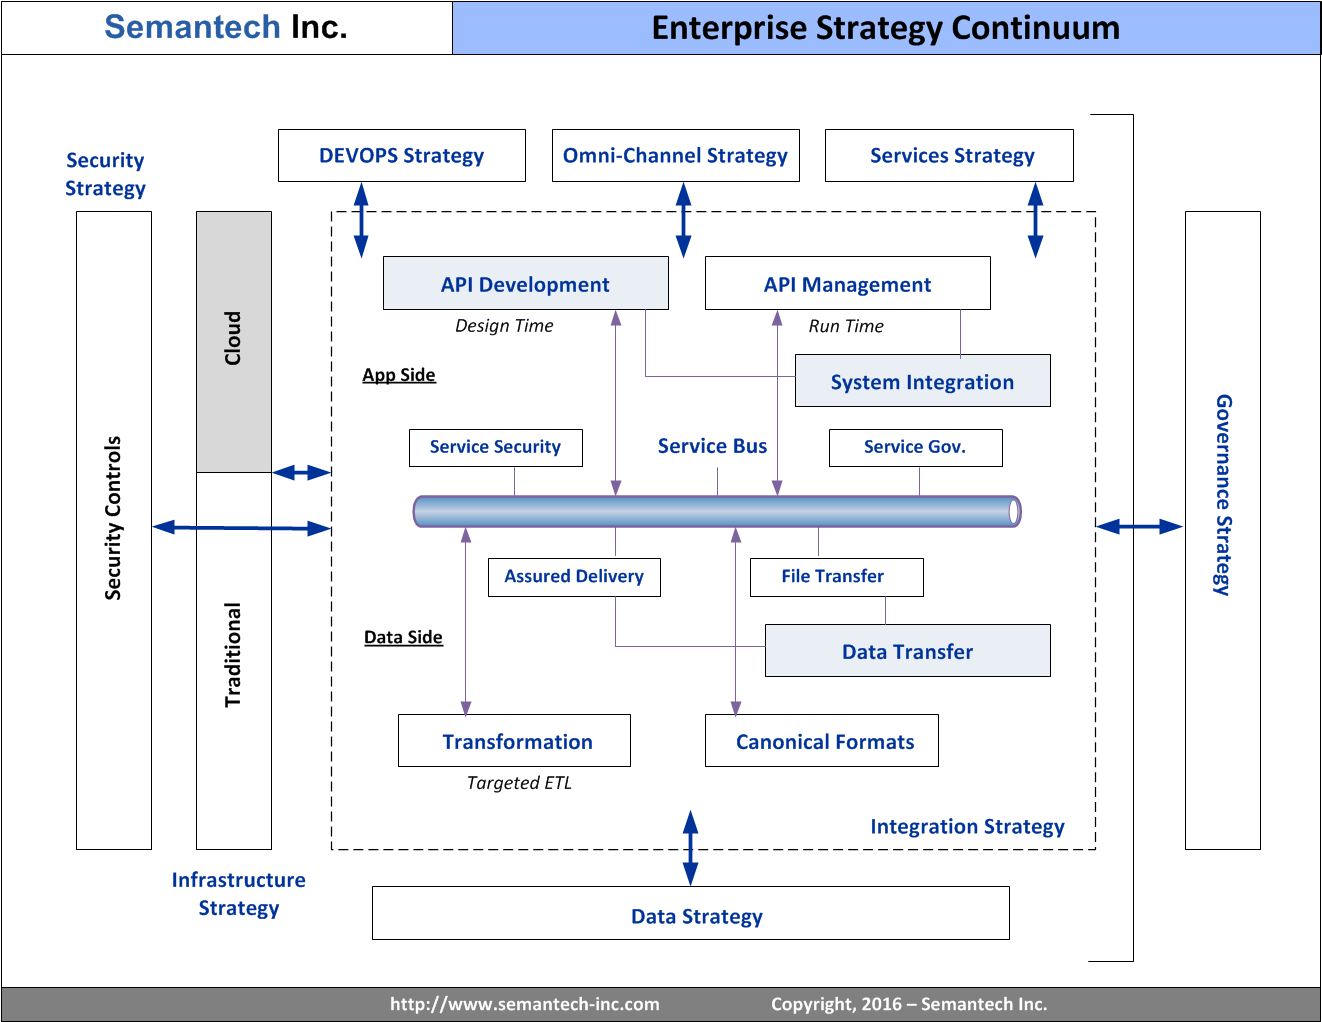 Semantech_Ent_Strategy_Continuum